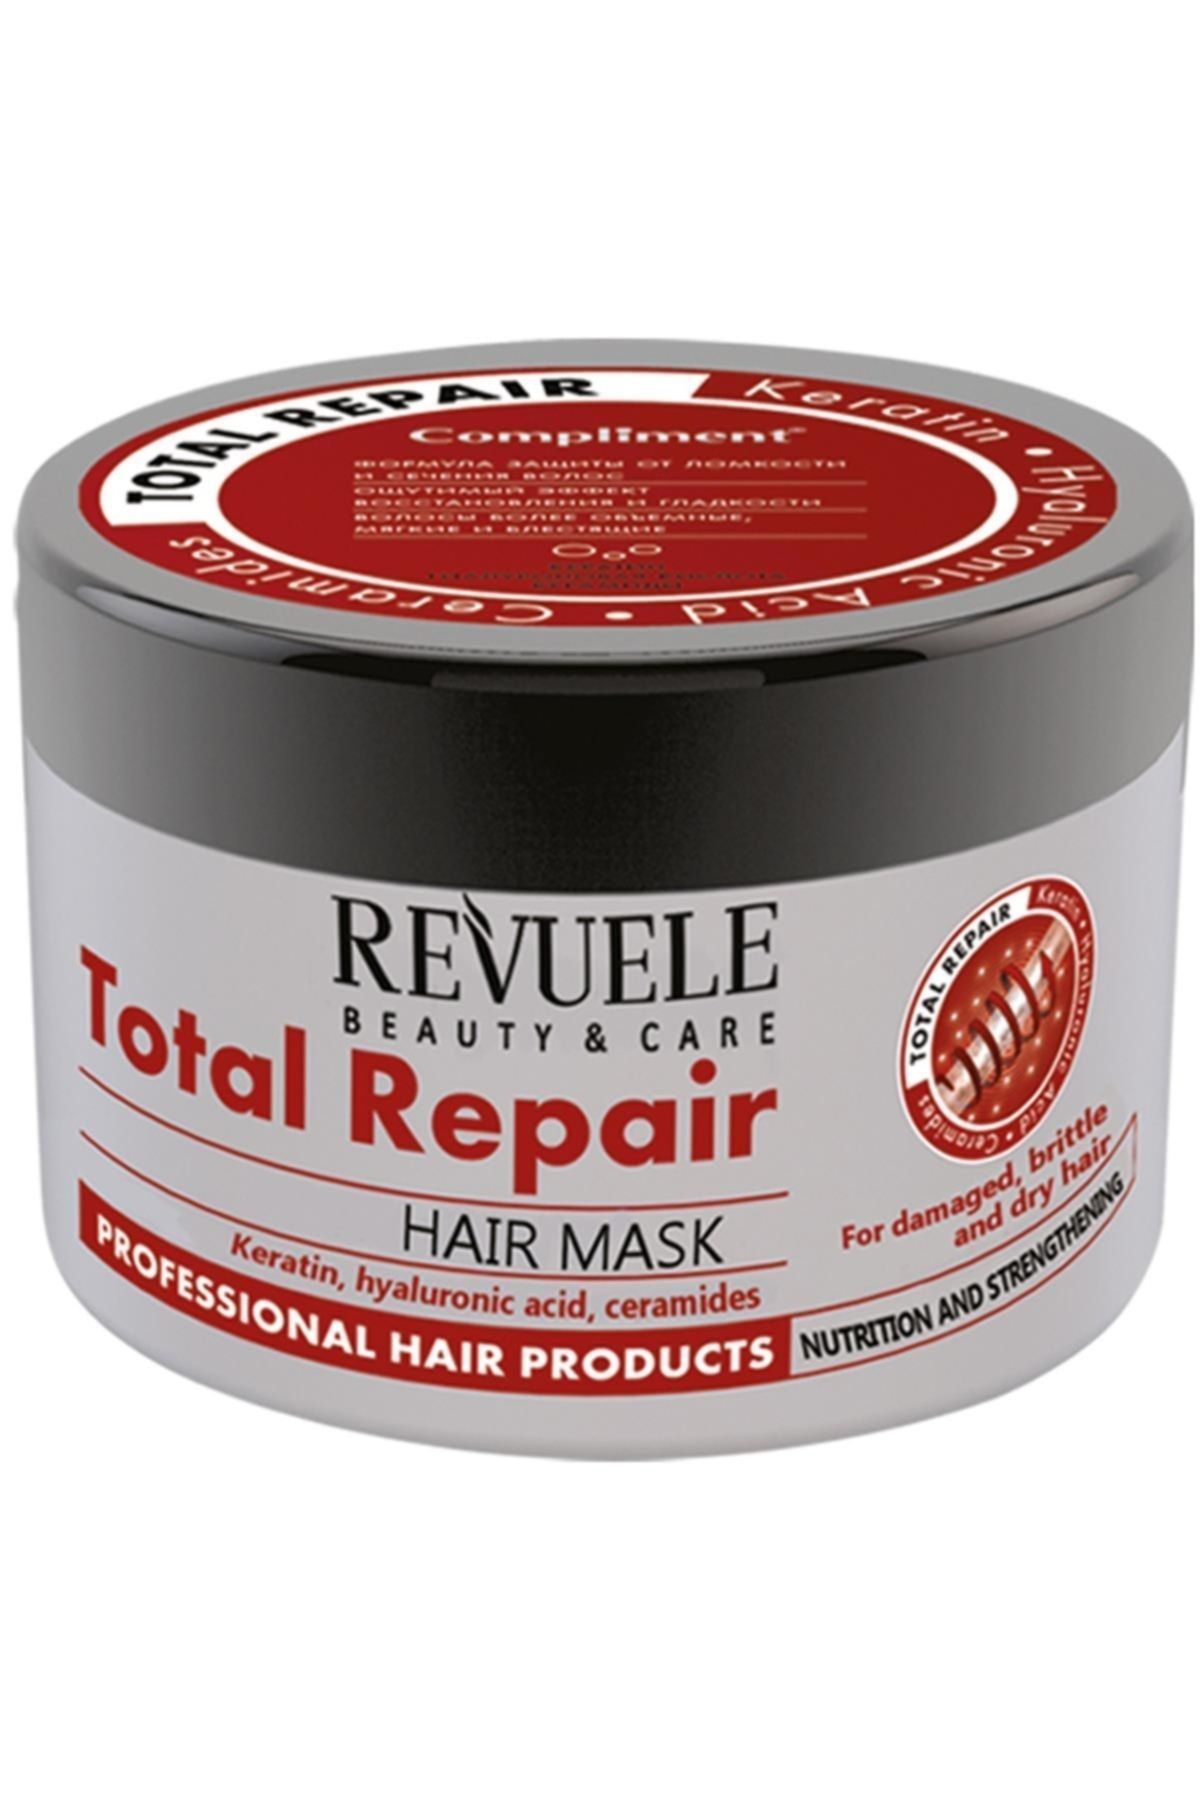 Маска для волос repair отзывы. Маска compliment total Repair. Compliment маска для волос. Маска для волос total Repair. Маска для волос комплимент total Repair с кератином.